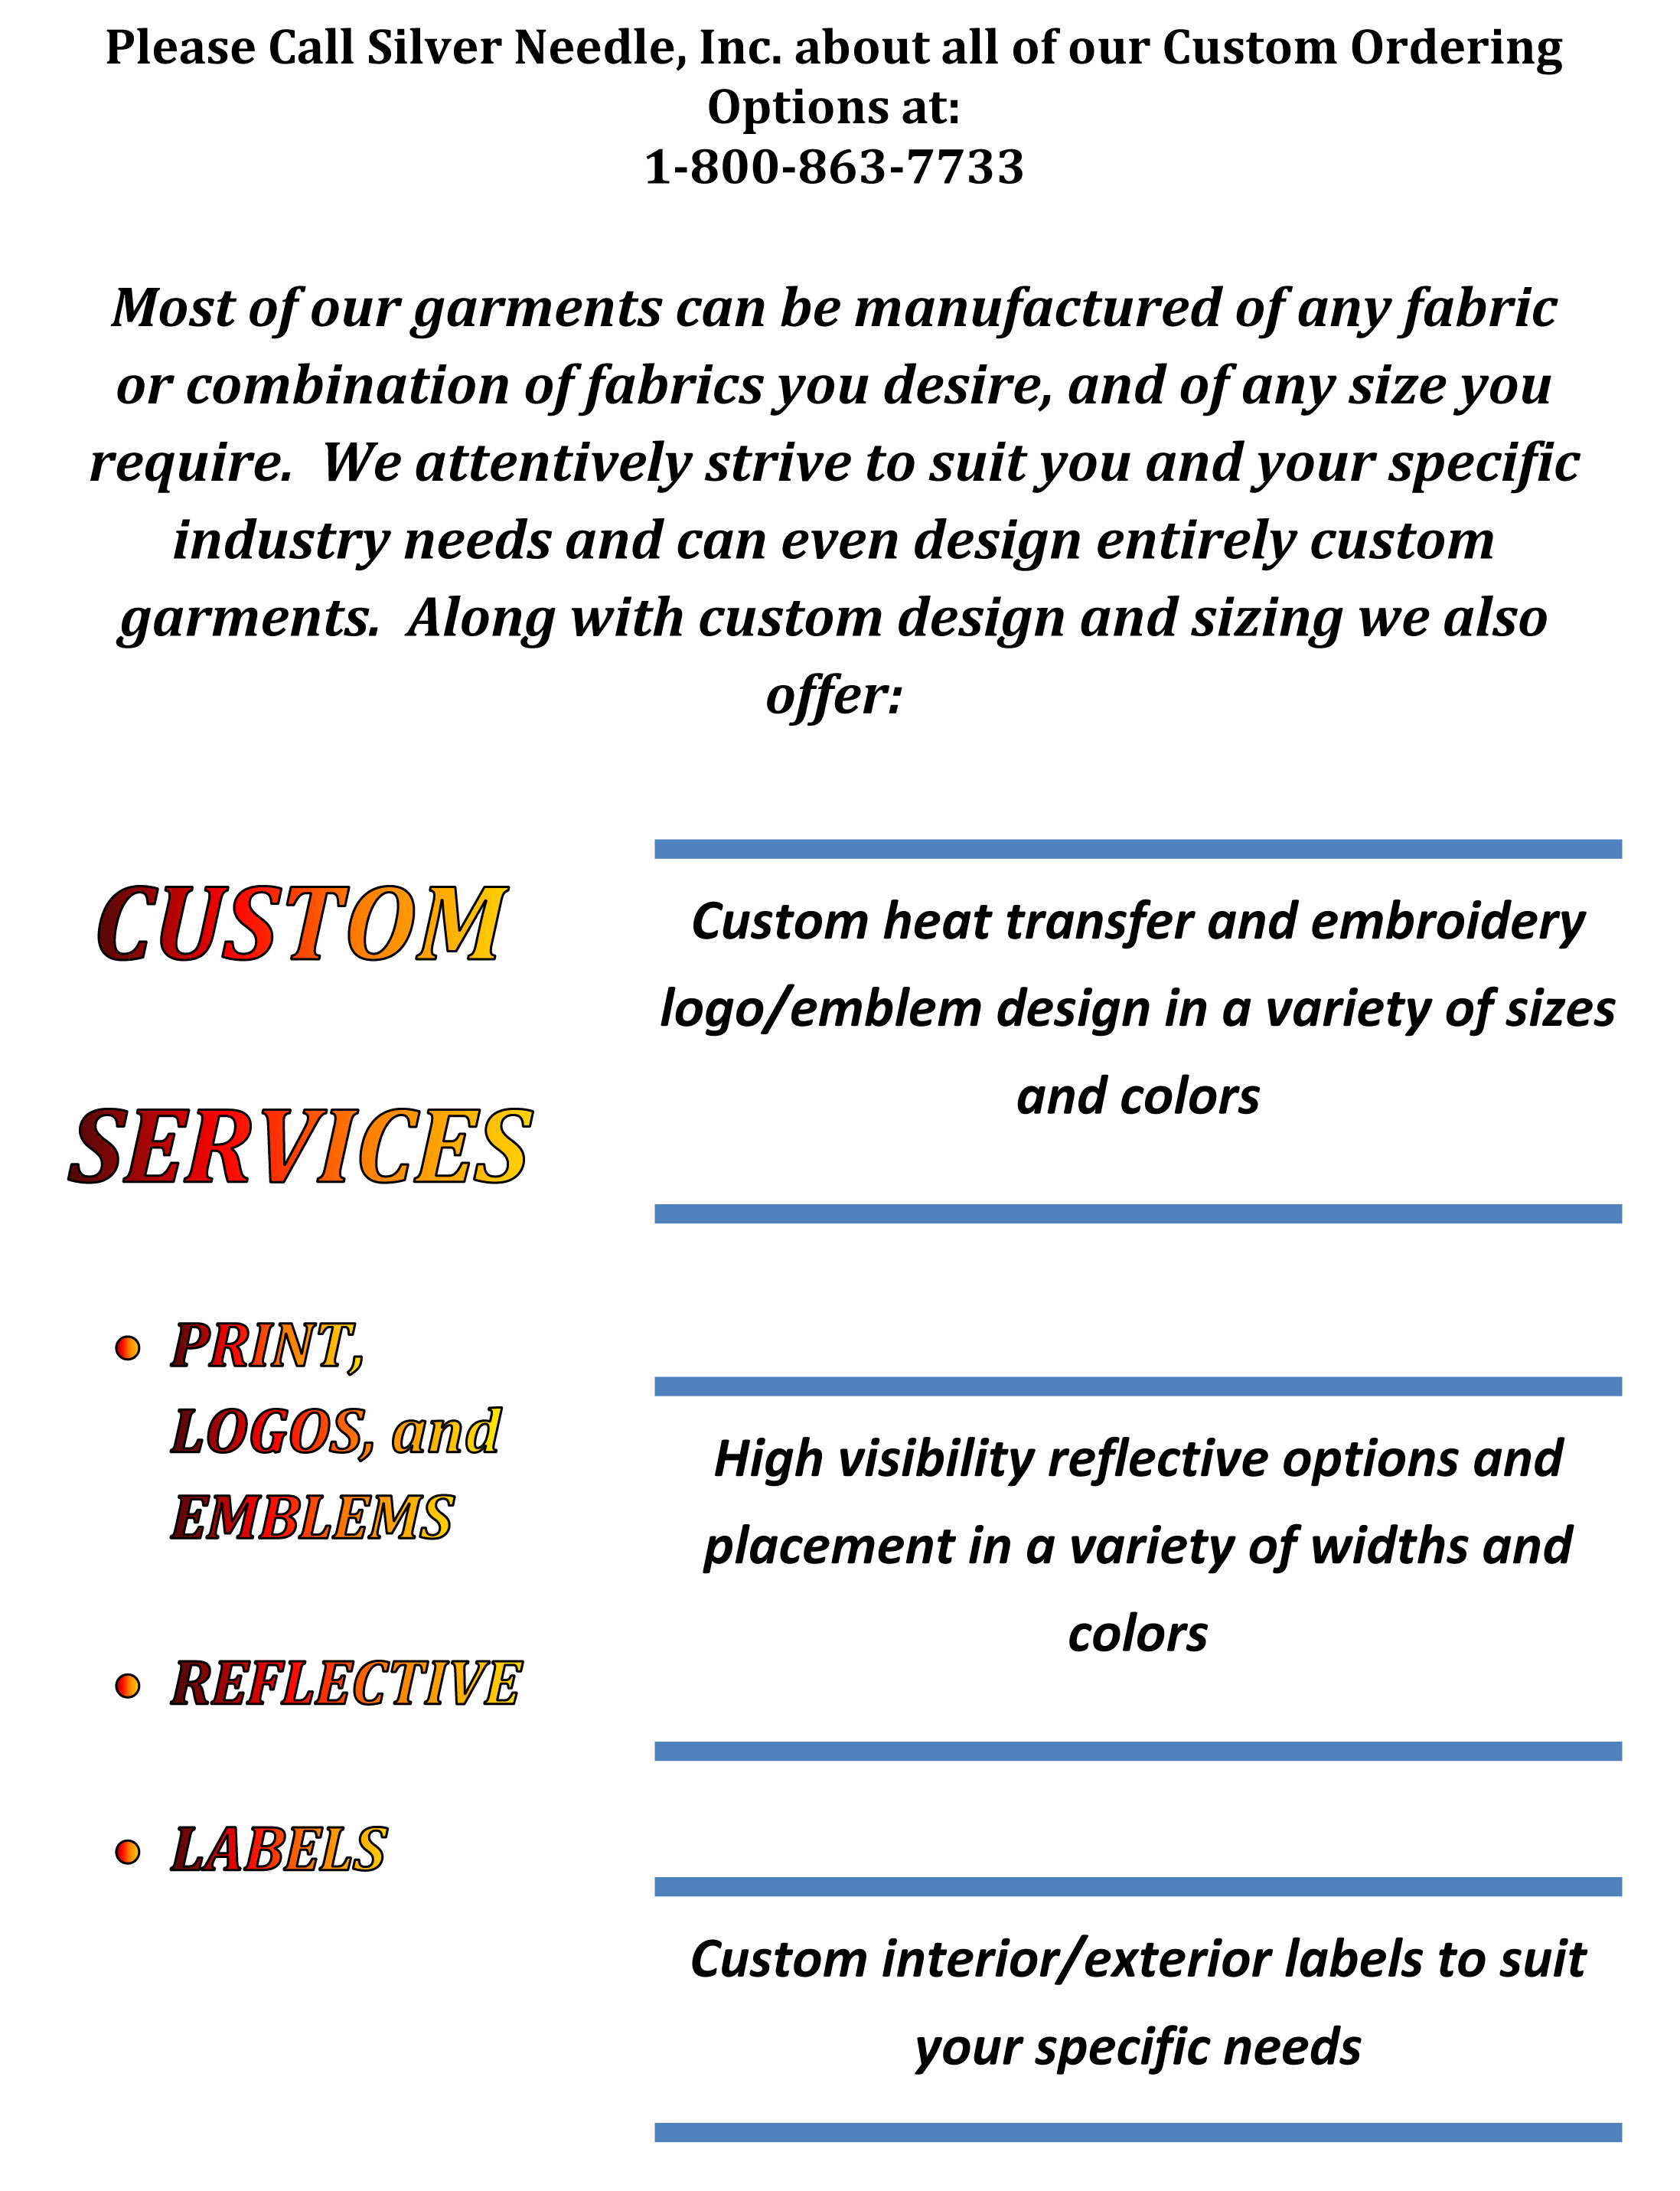 custom-services-labels-reflective-logos.jpg